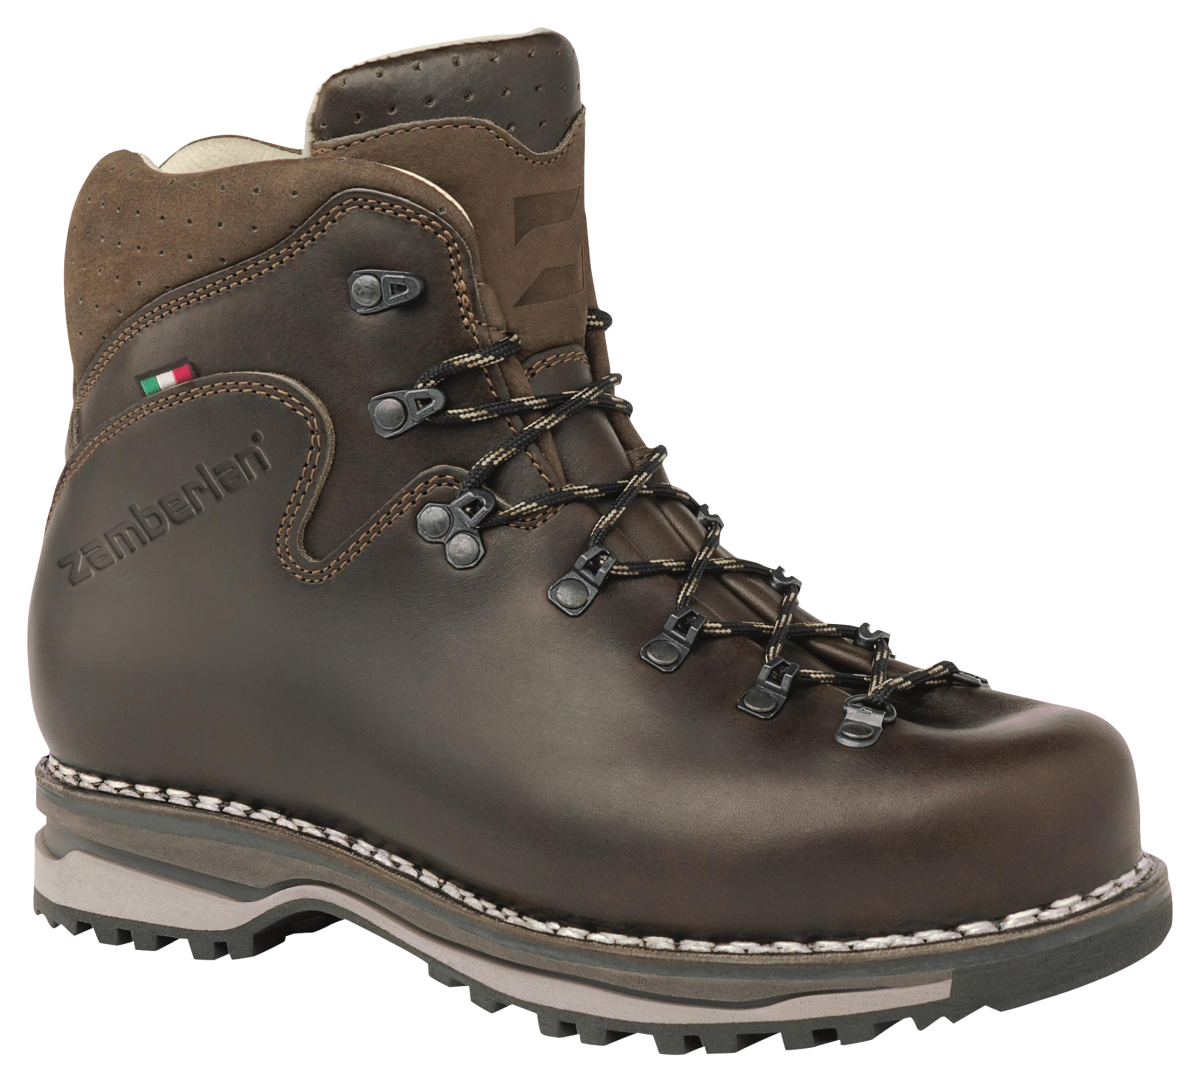 Zamberlan Latemar NW Hiking Boots for Men - Waxed Dark Brown - 11.5M